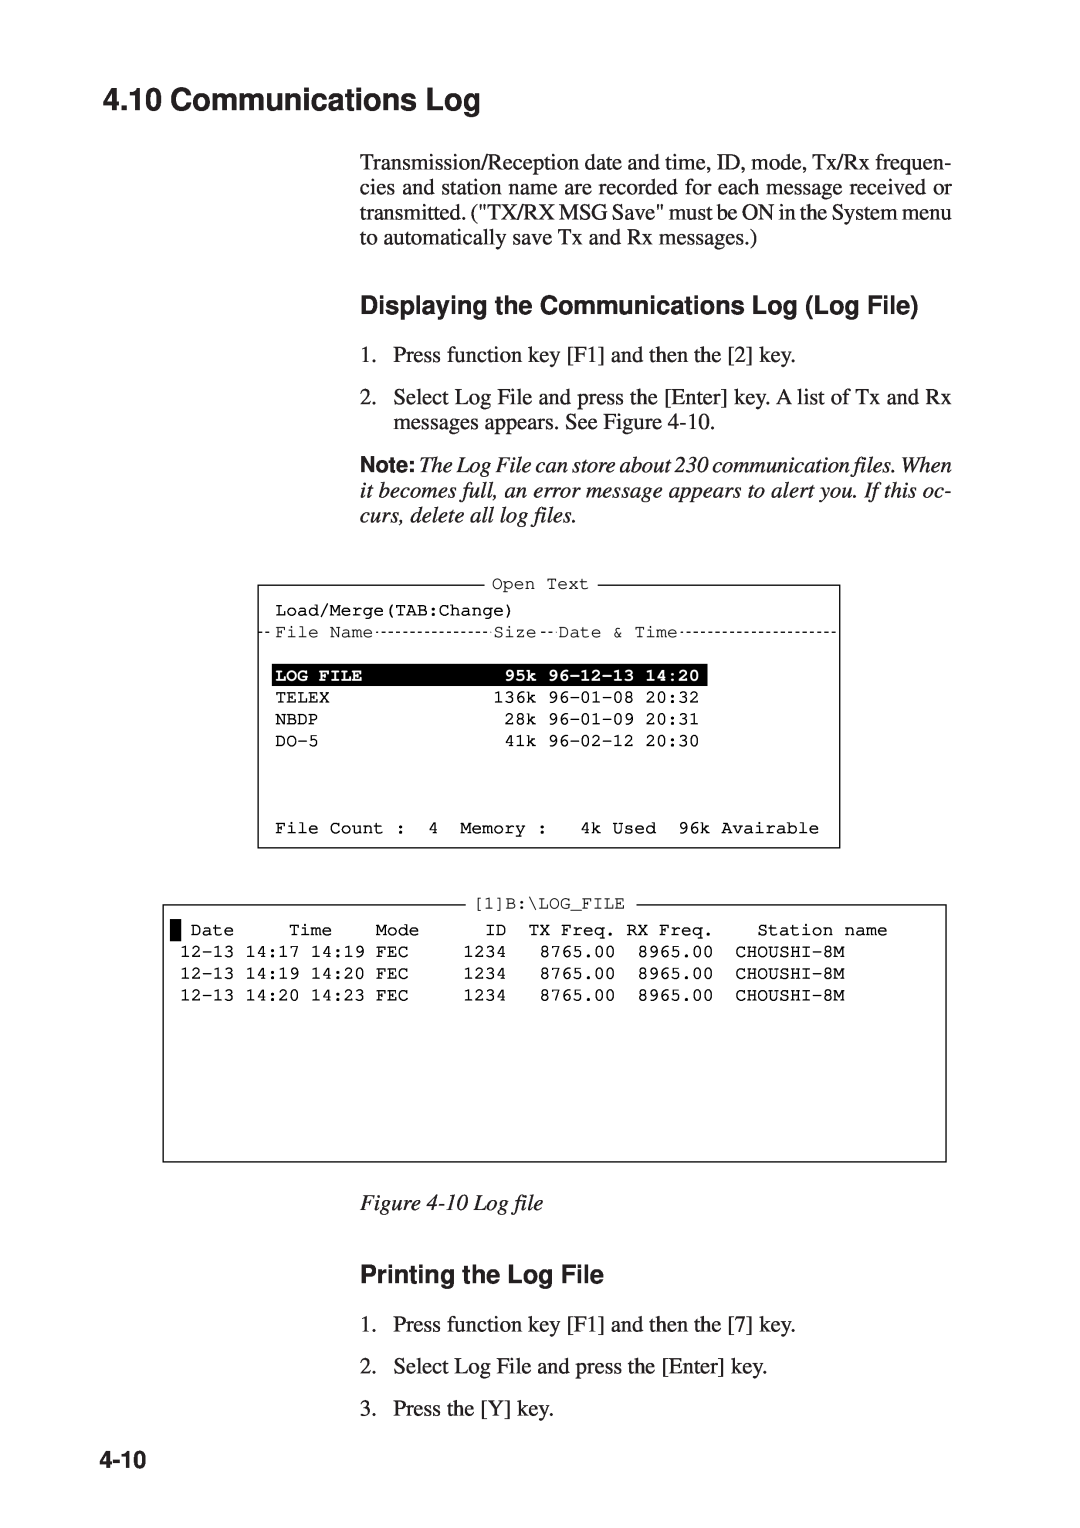 Furuno RC-1500-1T manual Displaying the Communications Log Log File, Printing the Log File, 10 Log file, 4-10 